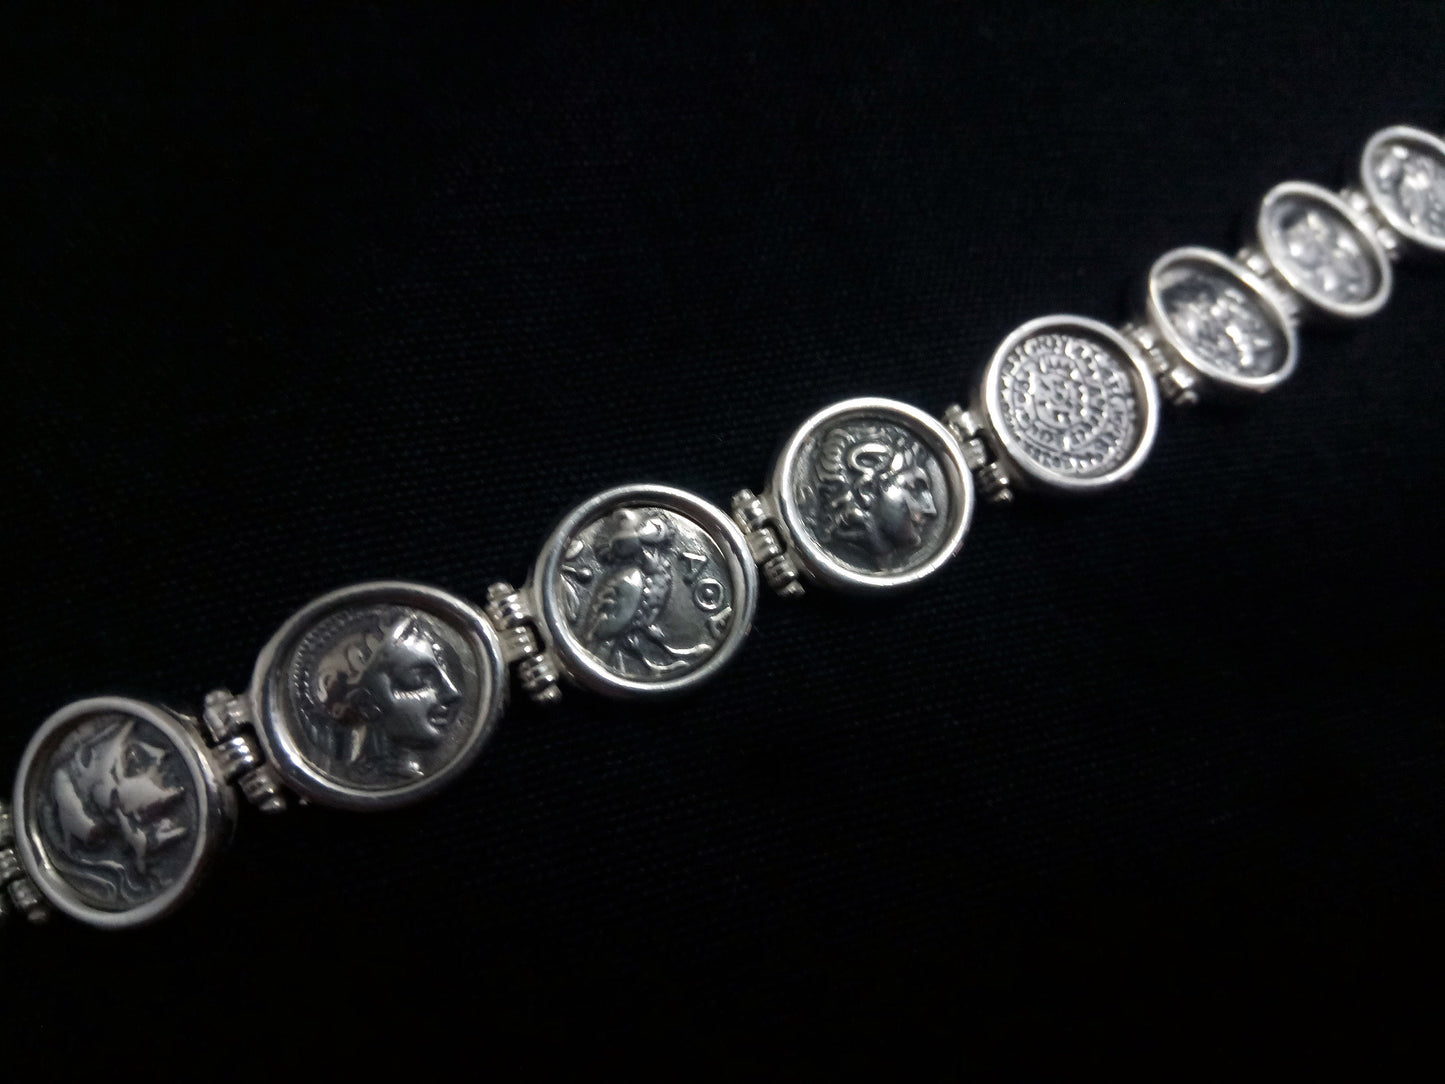 Sterling Silver 925 Ancient Greek Alexander Phaistos Athena Owl Macedonia Sun Coin Bracelet 19cm - 7.41 inches, Griechischer Silber Armband